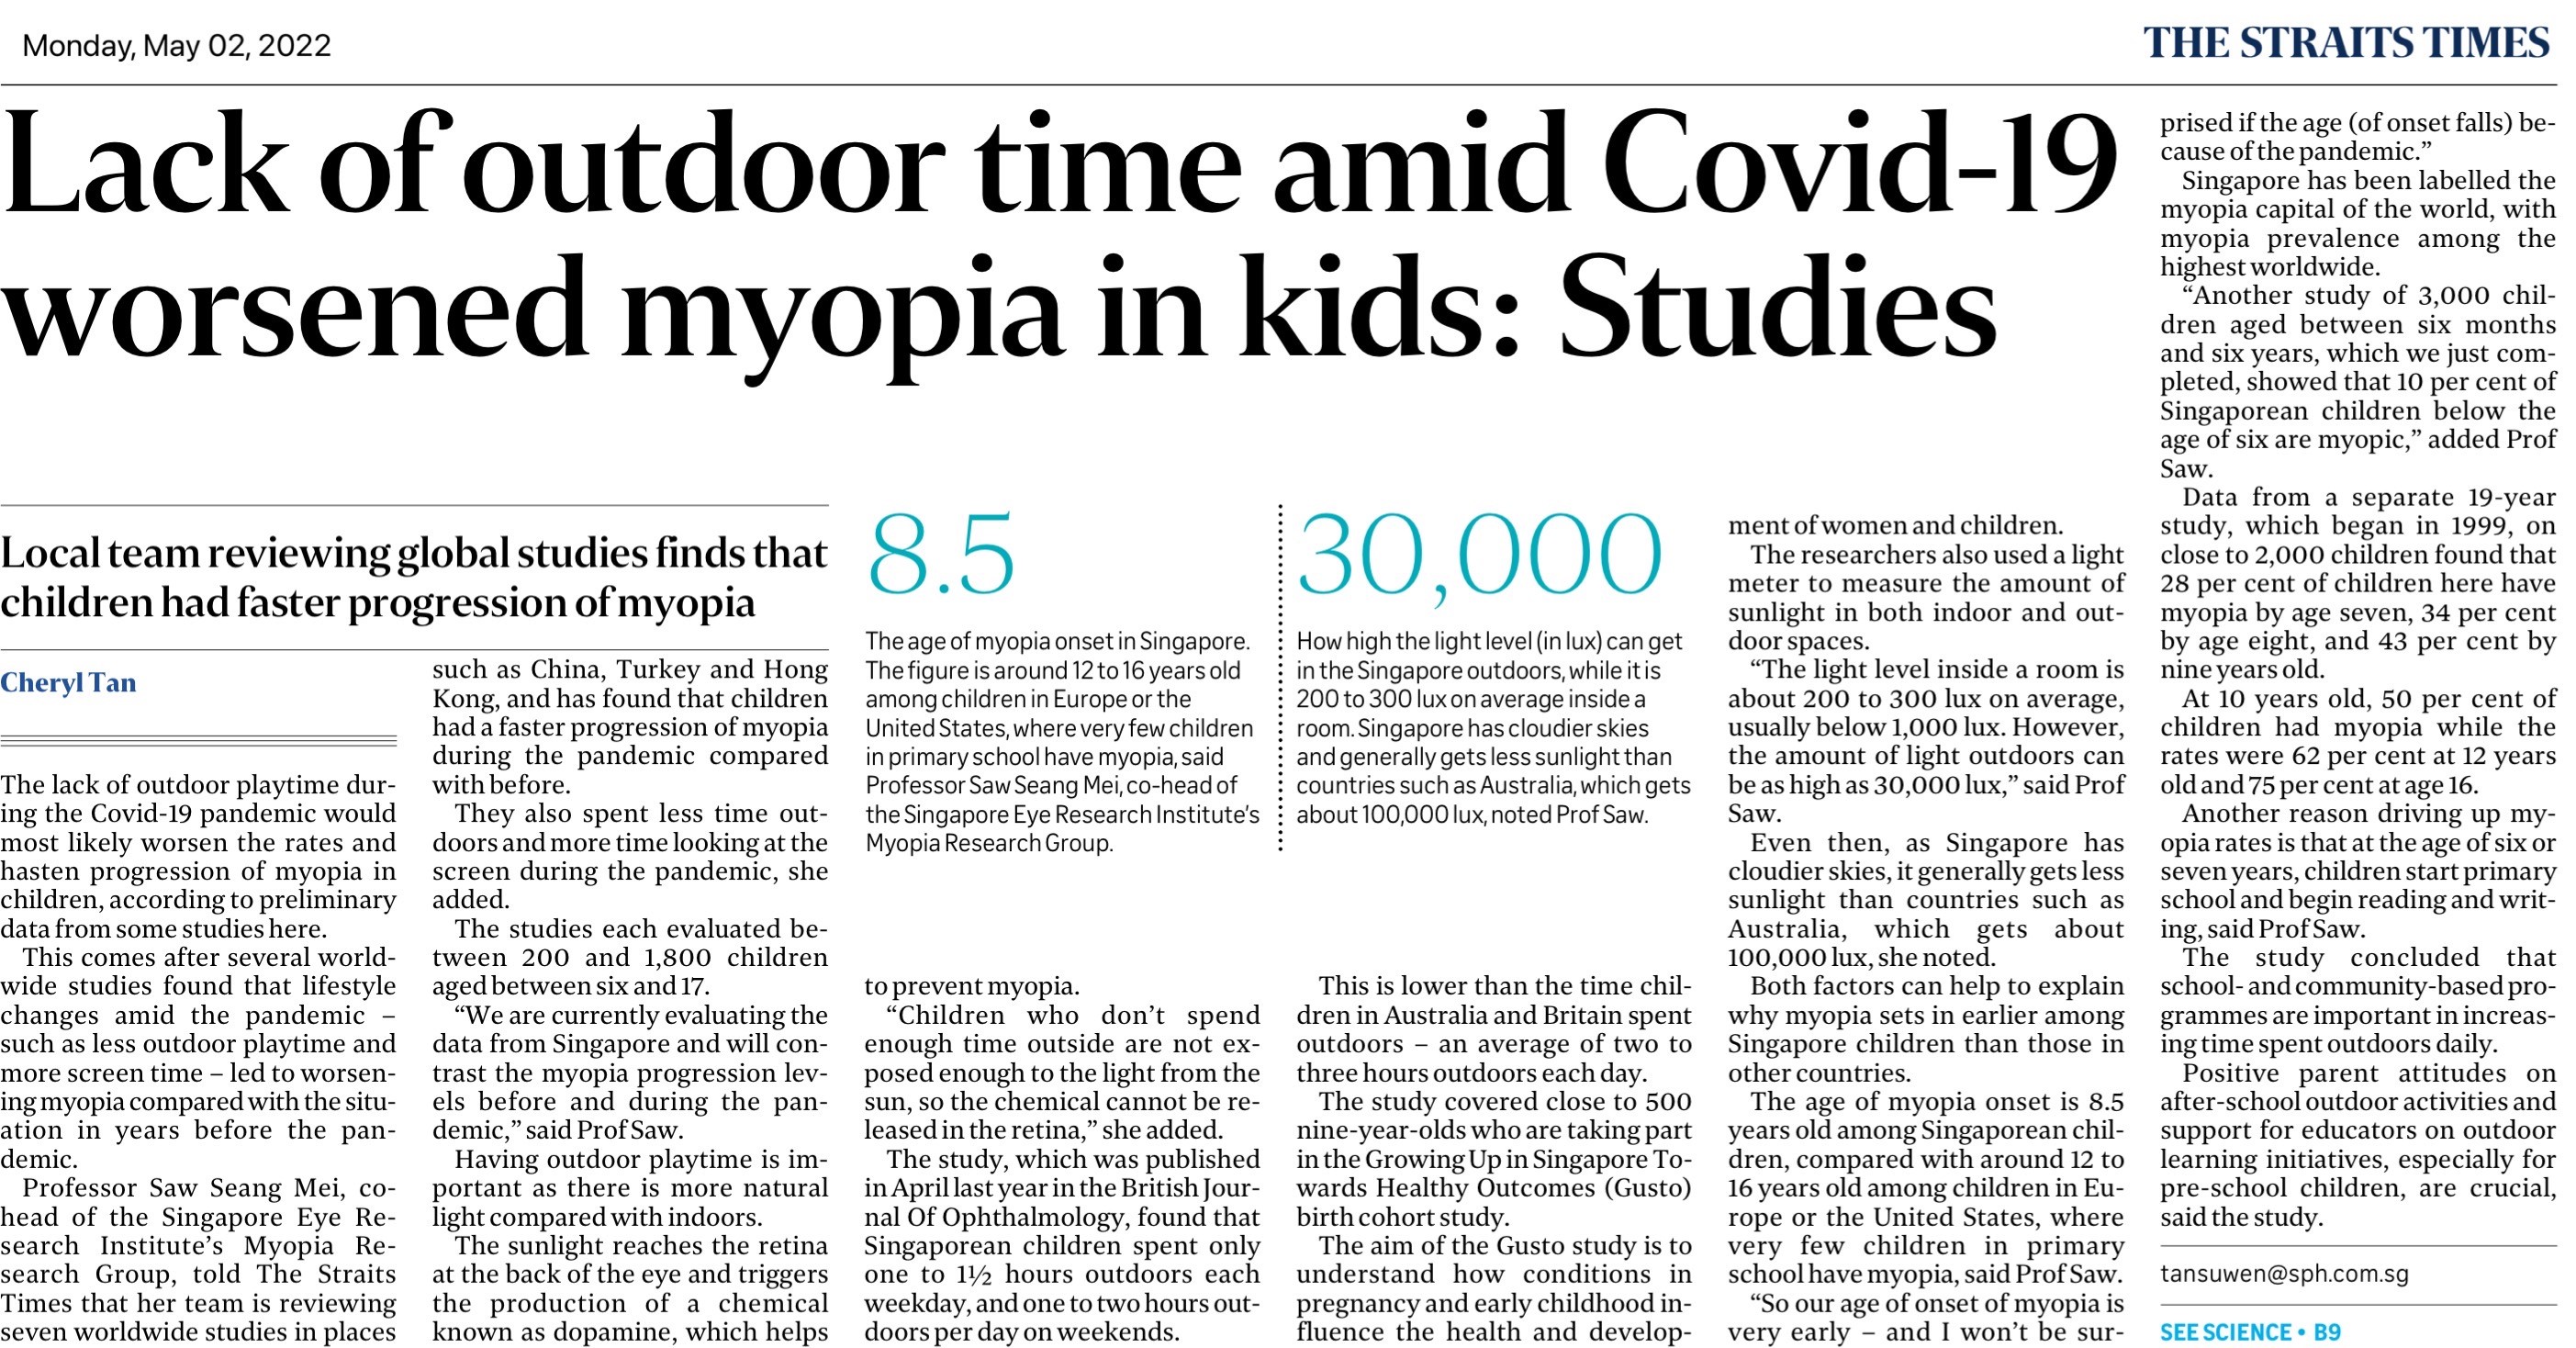 Lack of outdoor time amid Covid-19 worsened myopia in kids: Studies